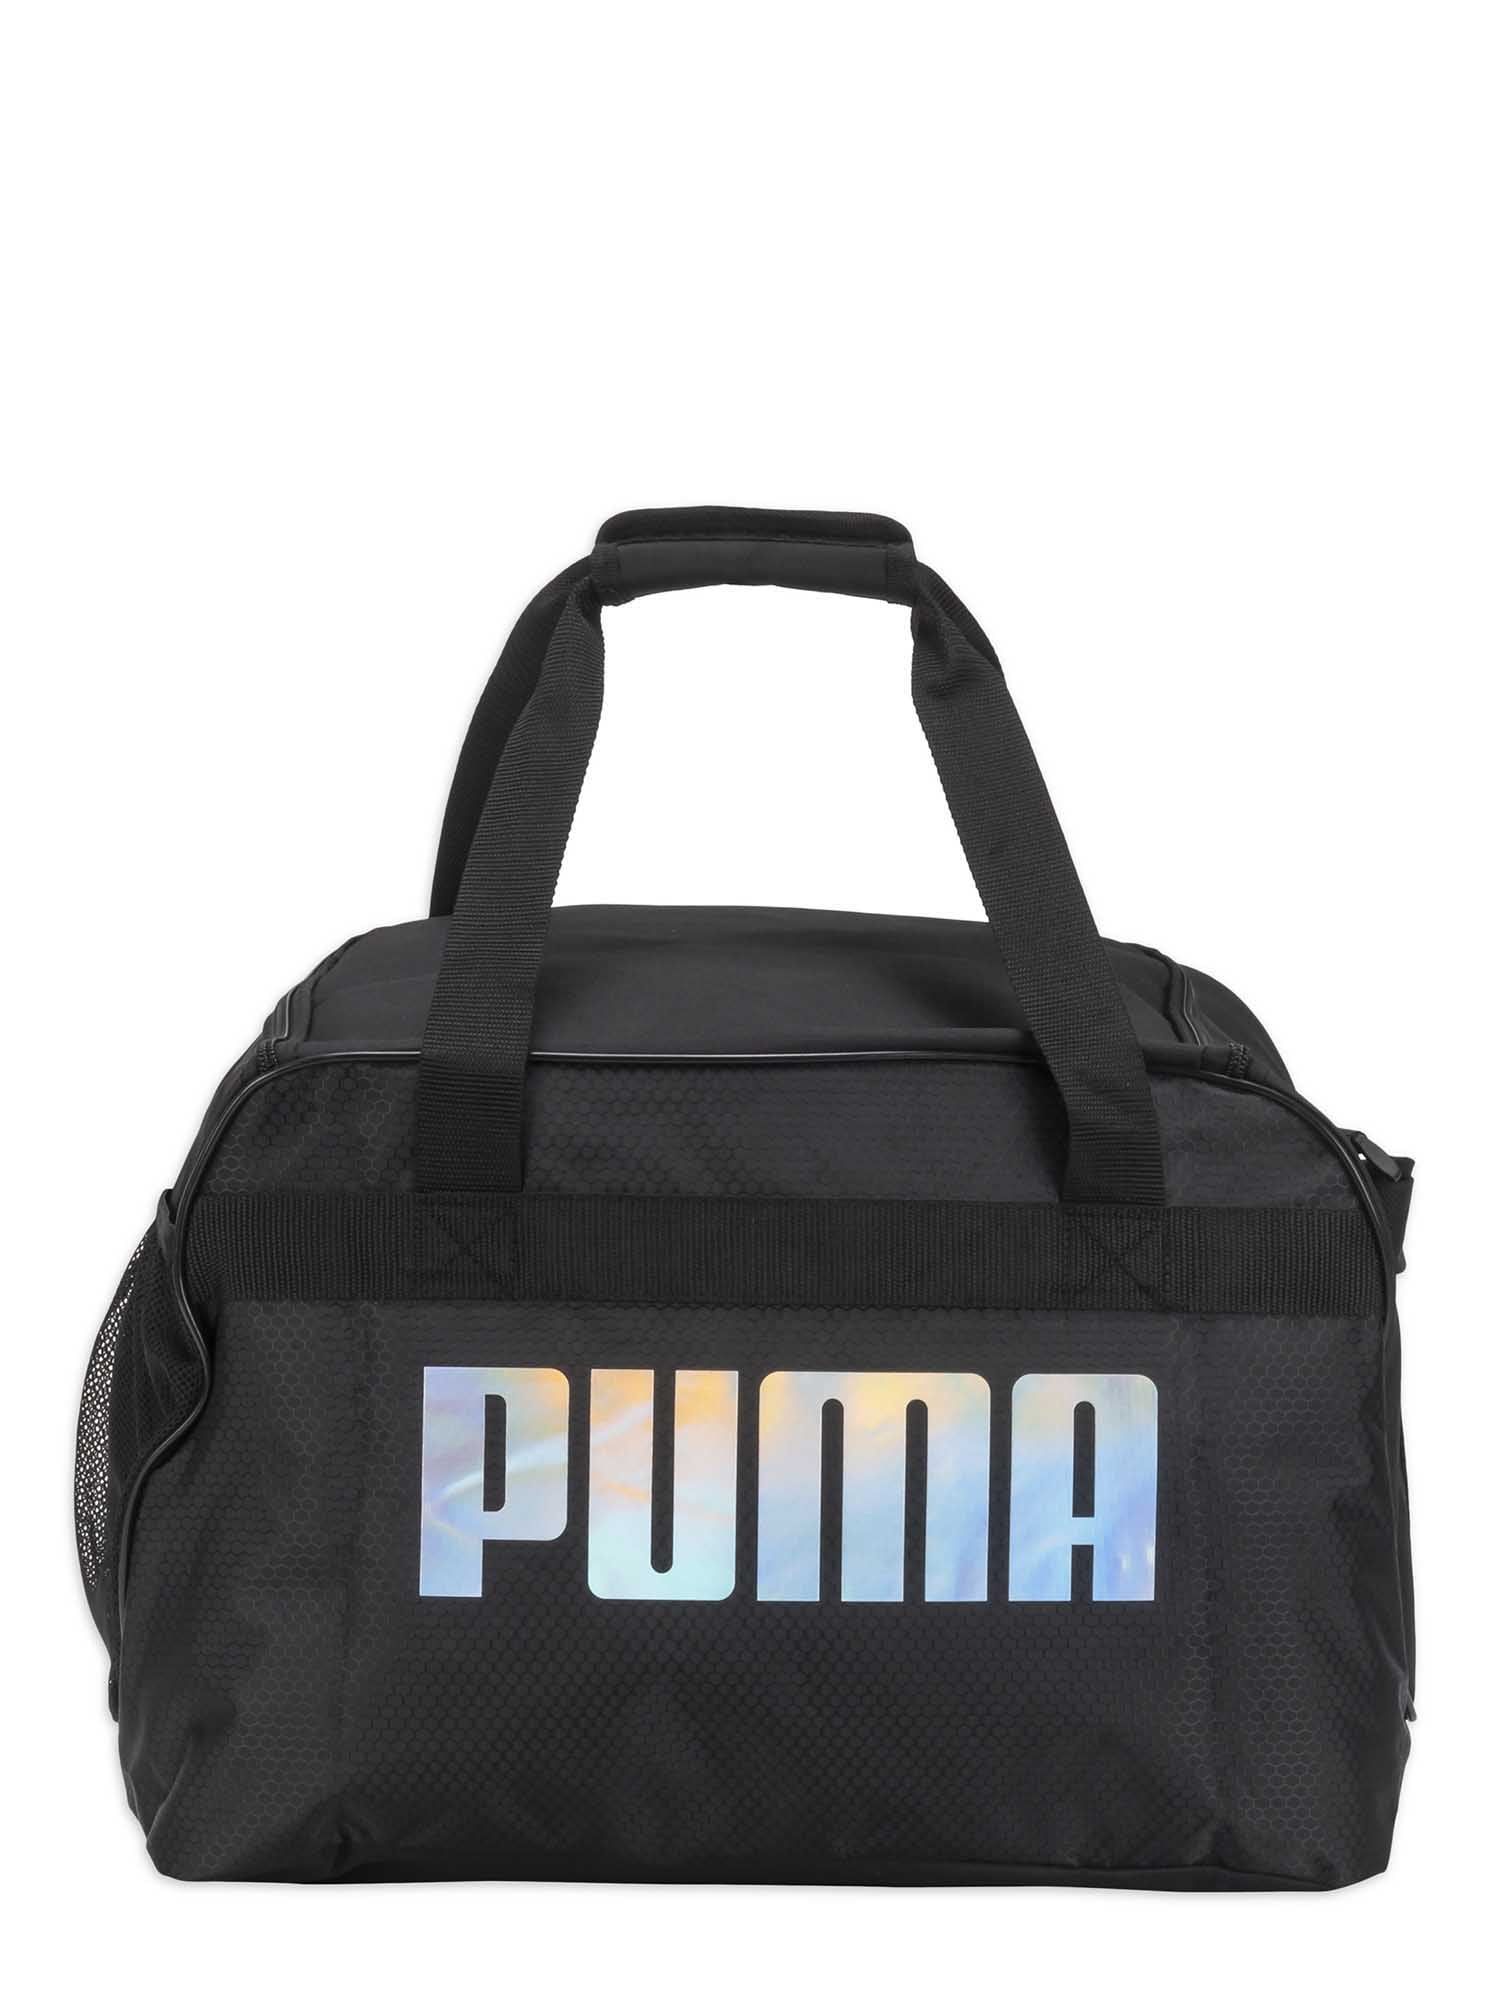 puma duffle bags online